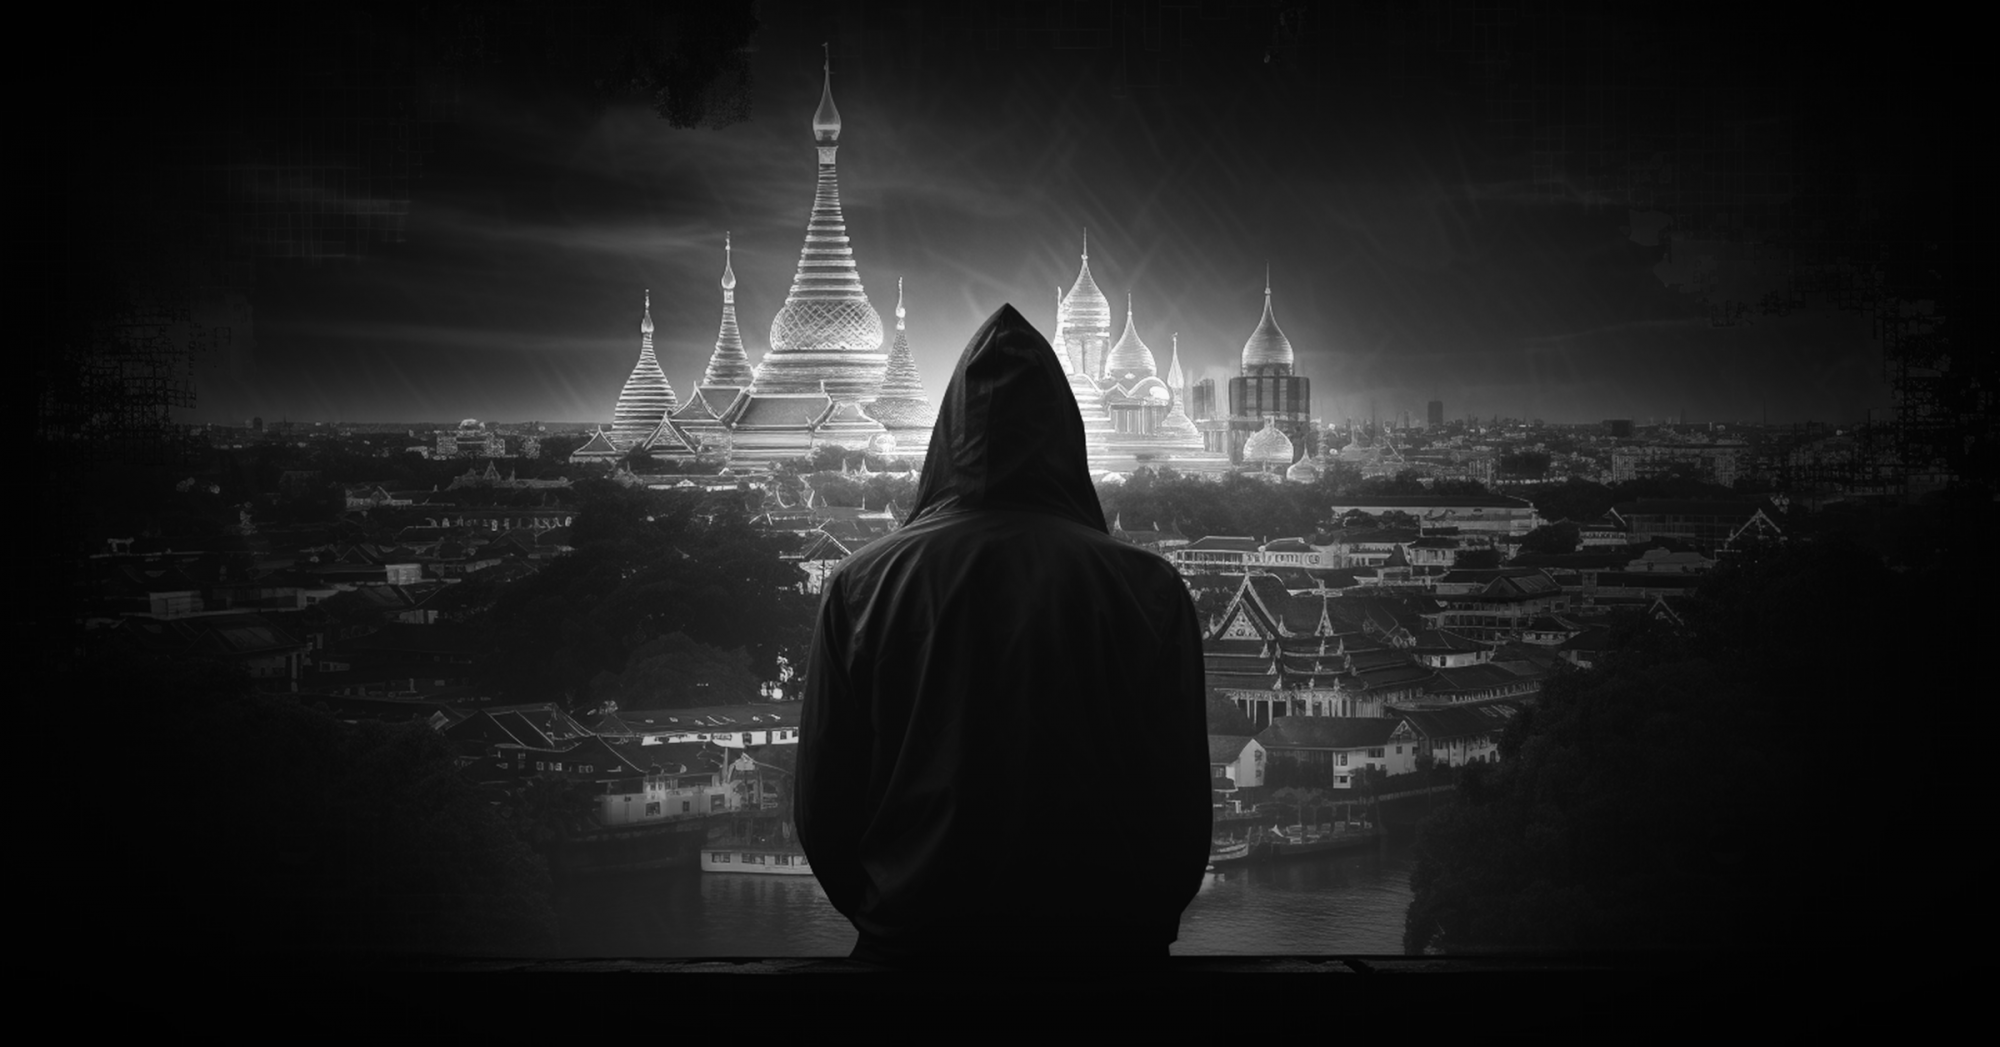 Cybercriminals leaked massive volumes of stolen PII data from Thailand in Dark Web